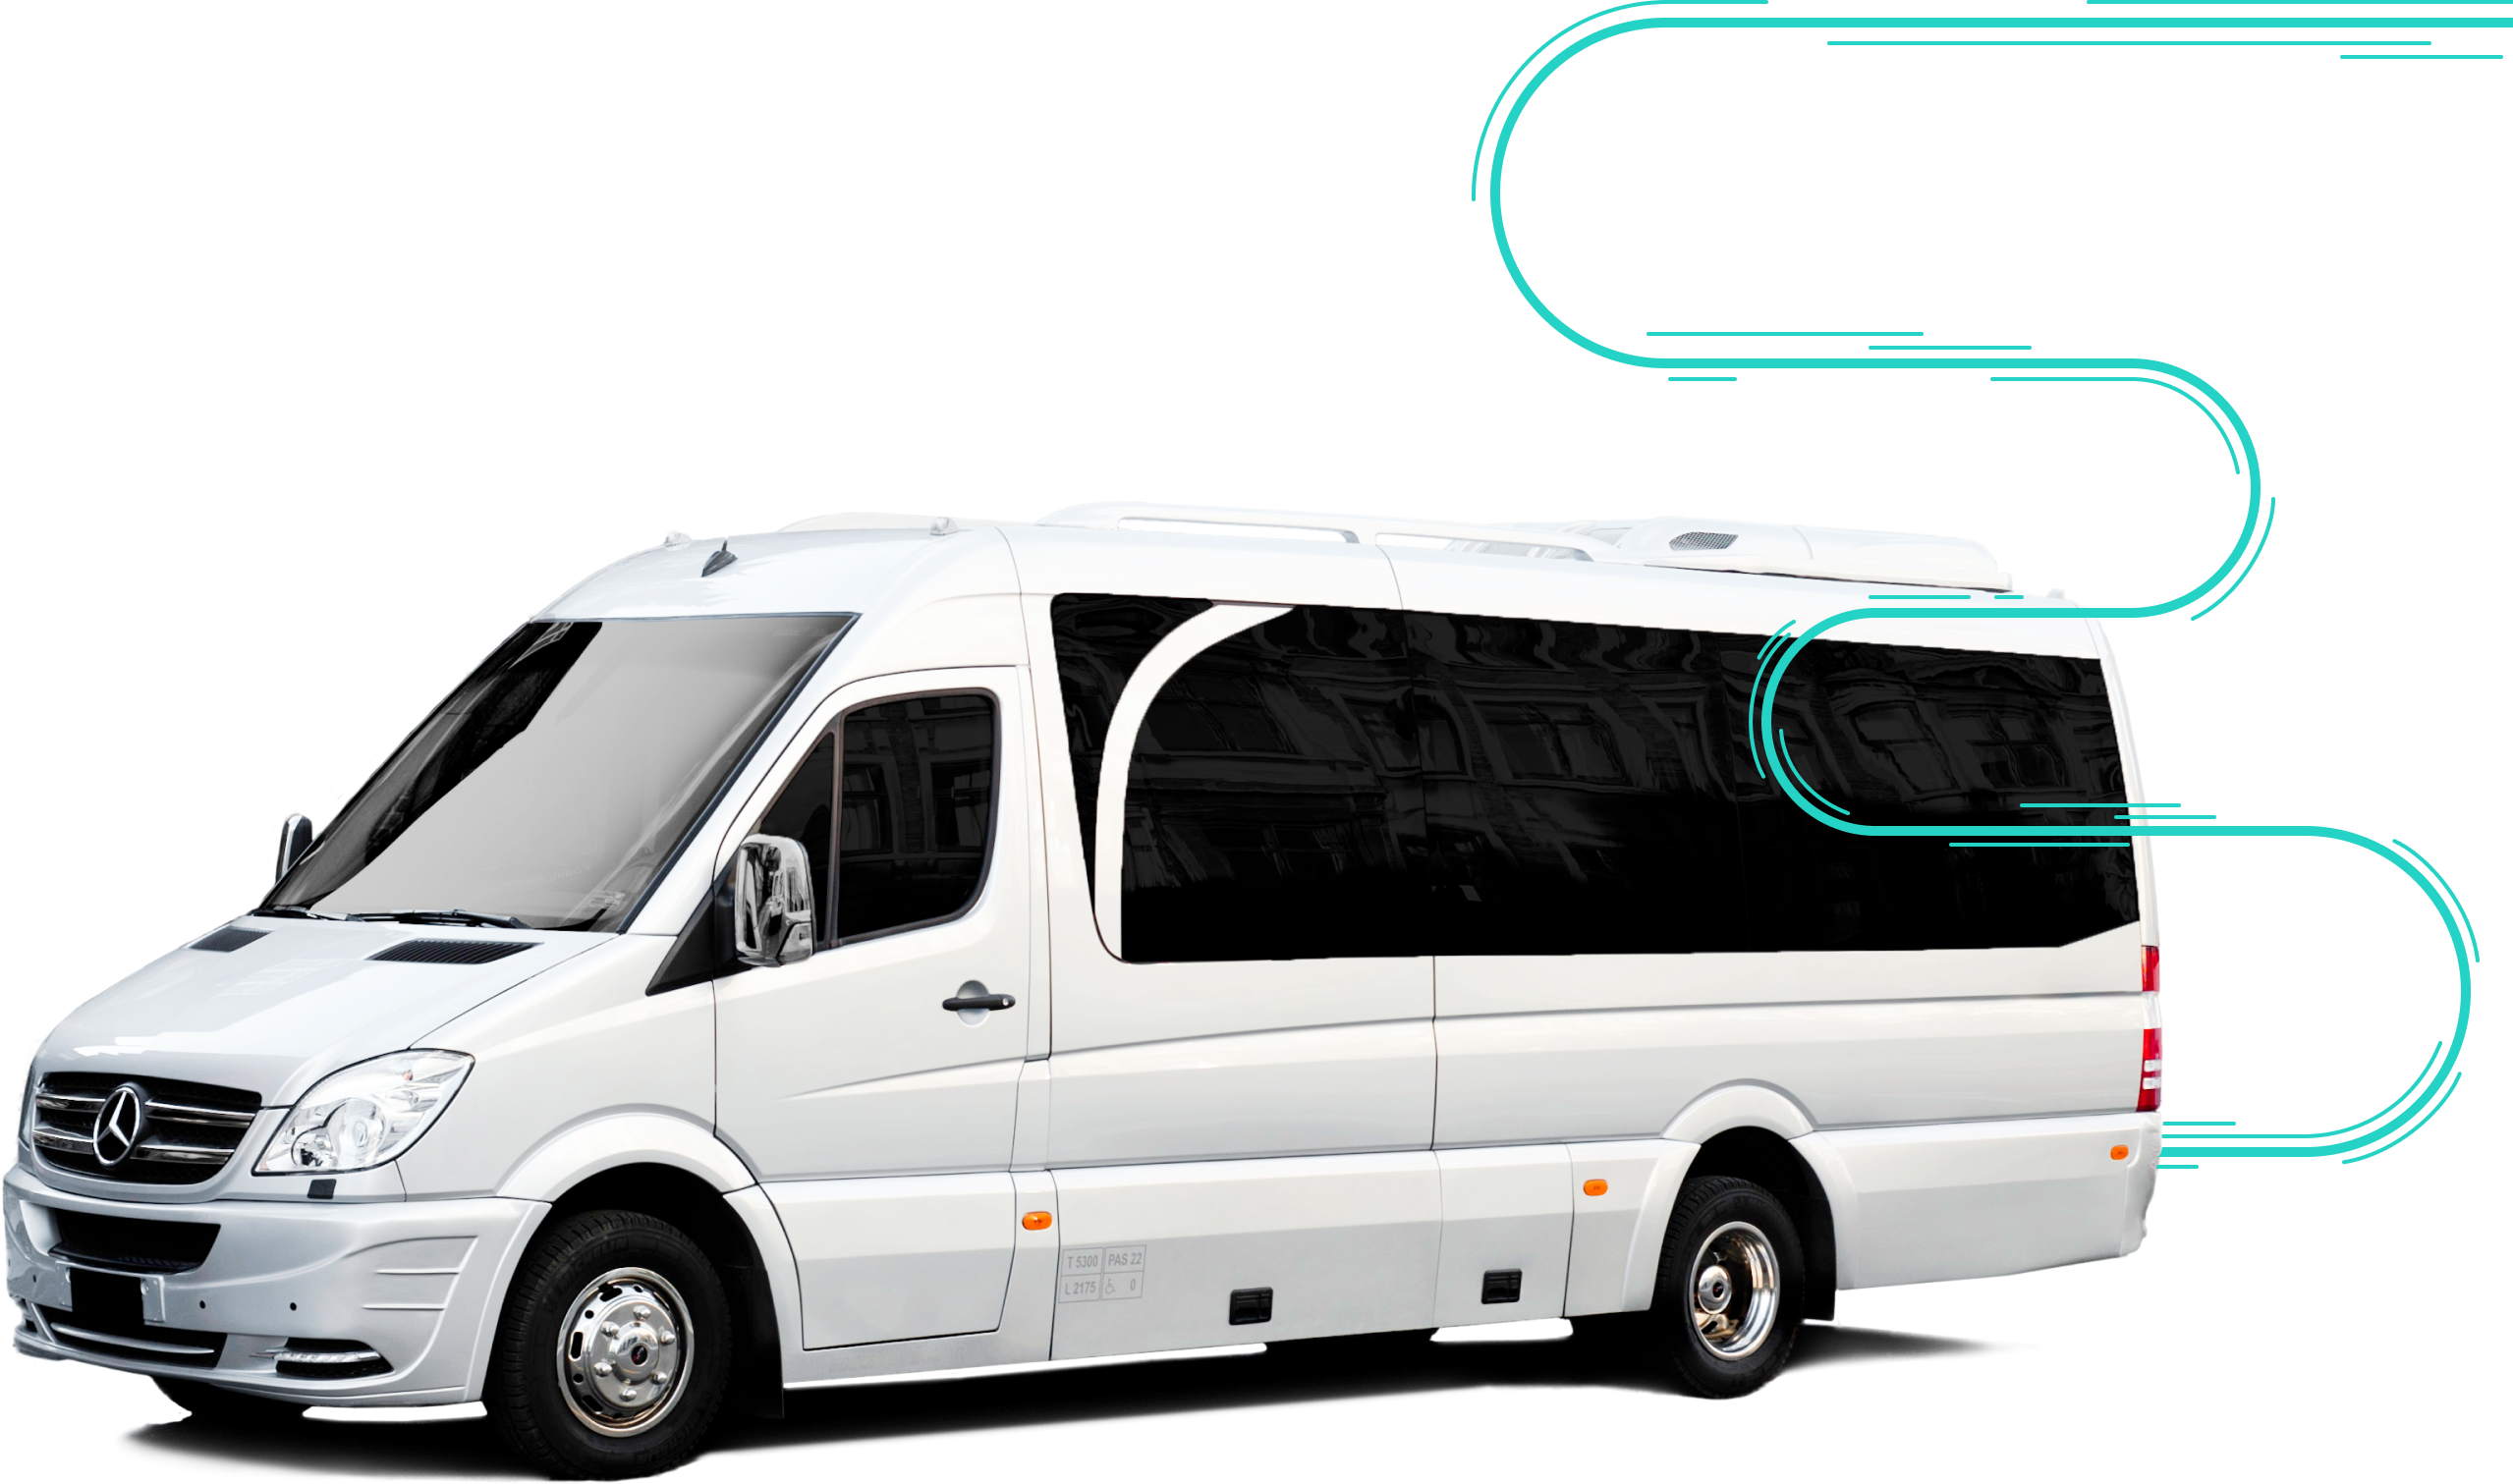 DPV Transportation - Shuttle Bus Rental Services